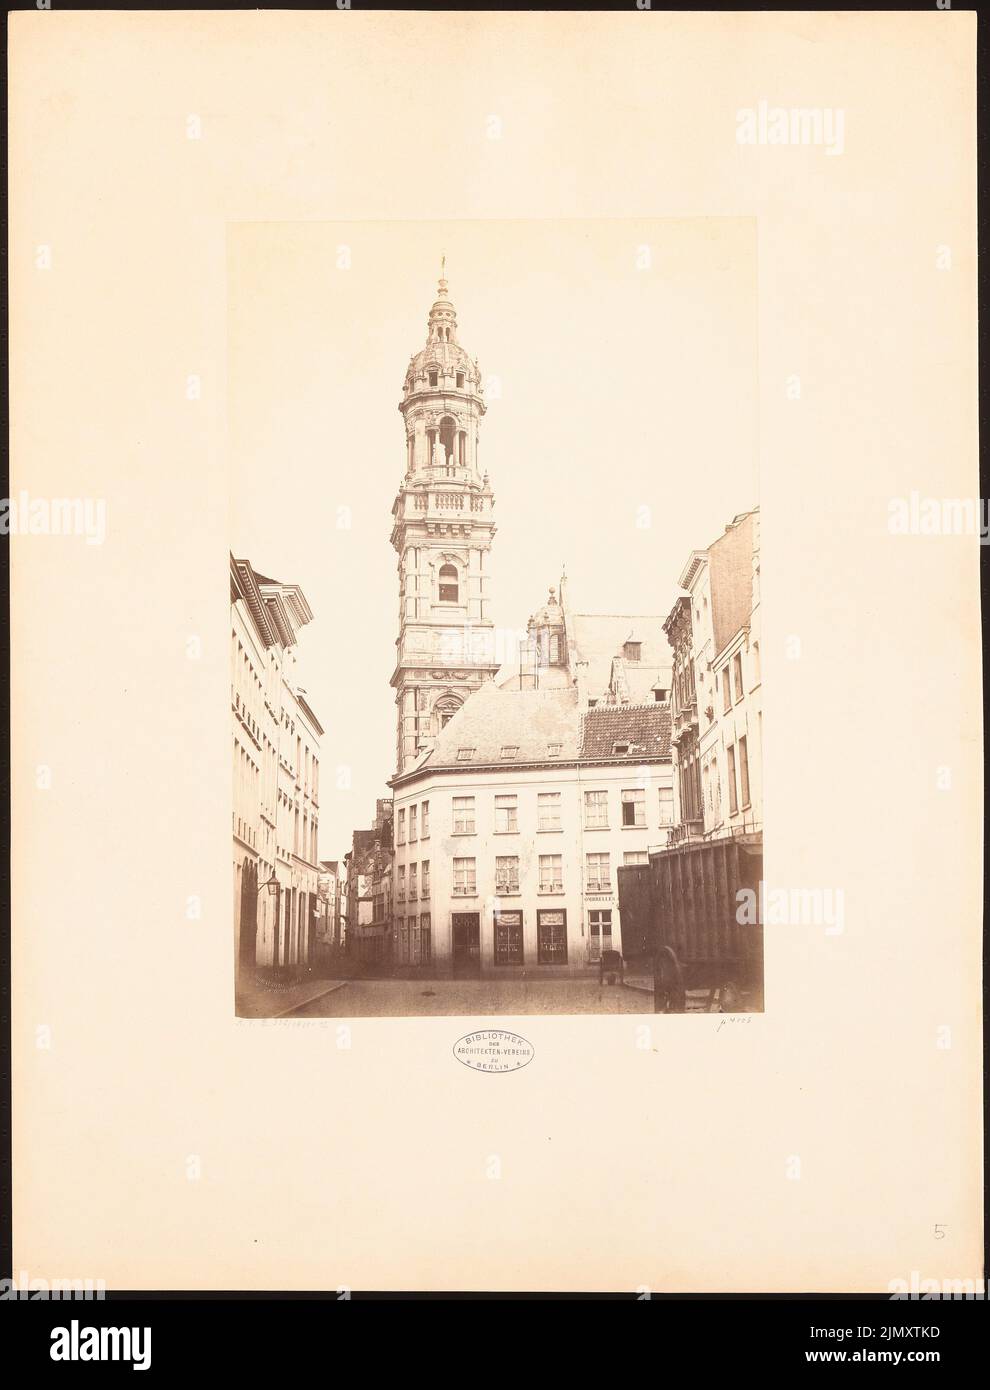 N.N., Torre della Chiesa Gesuita (Karl-Borromäus-Kirche), Anversa (senza data): Vista della torre da sud. Foto su carta, 63,9 x 48,7 cm (inclusi i bordi di scansione) Foto Stock